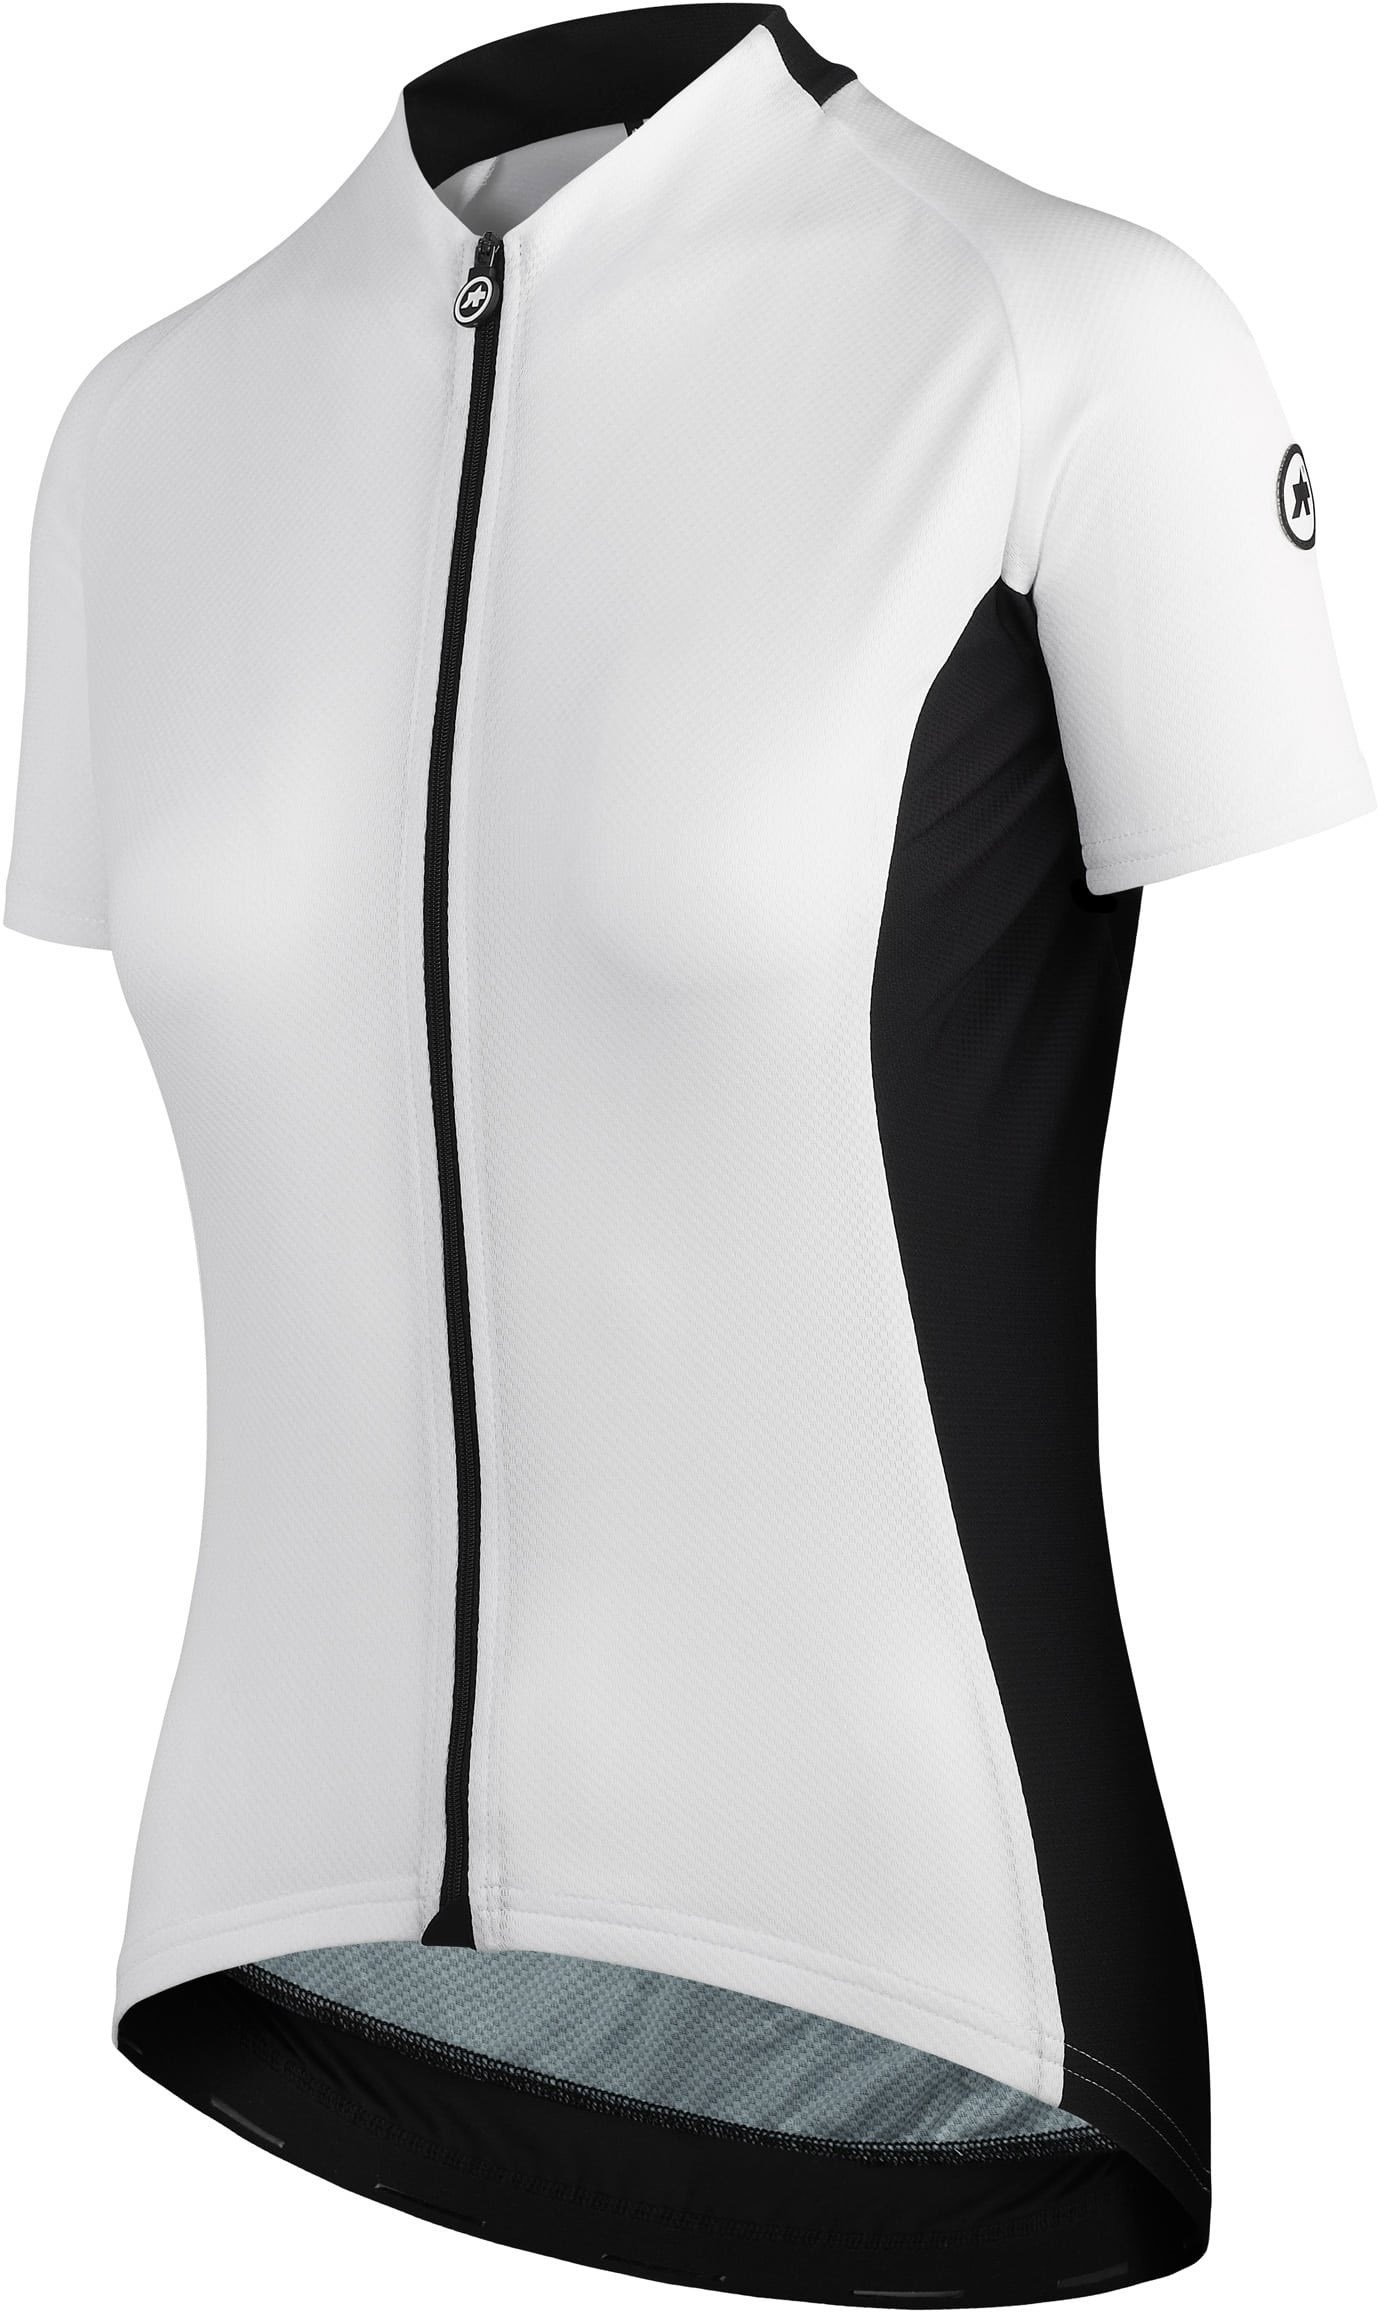 Beklædning - Cykeltrøjer - Assos Dame Cykeltrøje UMA GT Short Sleeve Jersey, Hvid